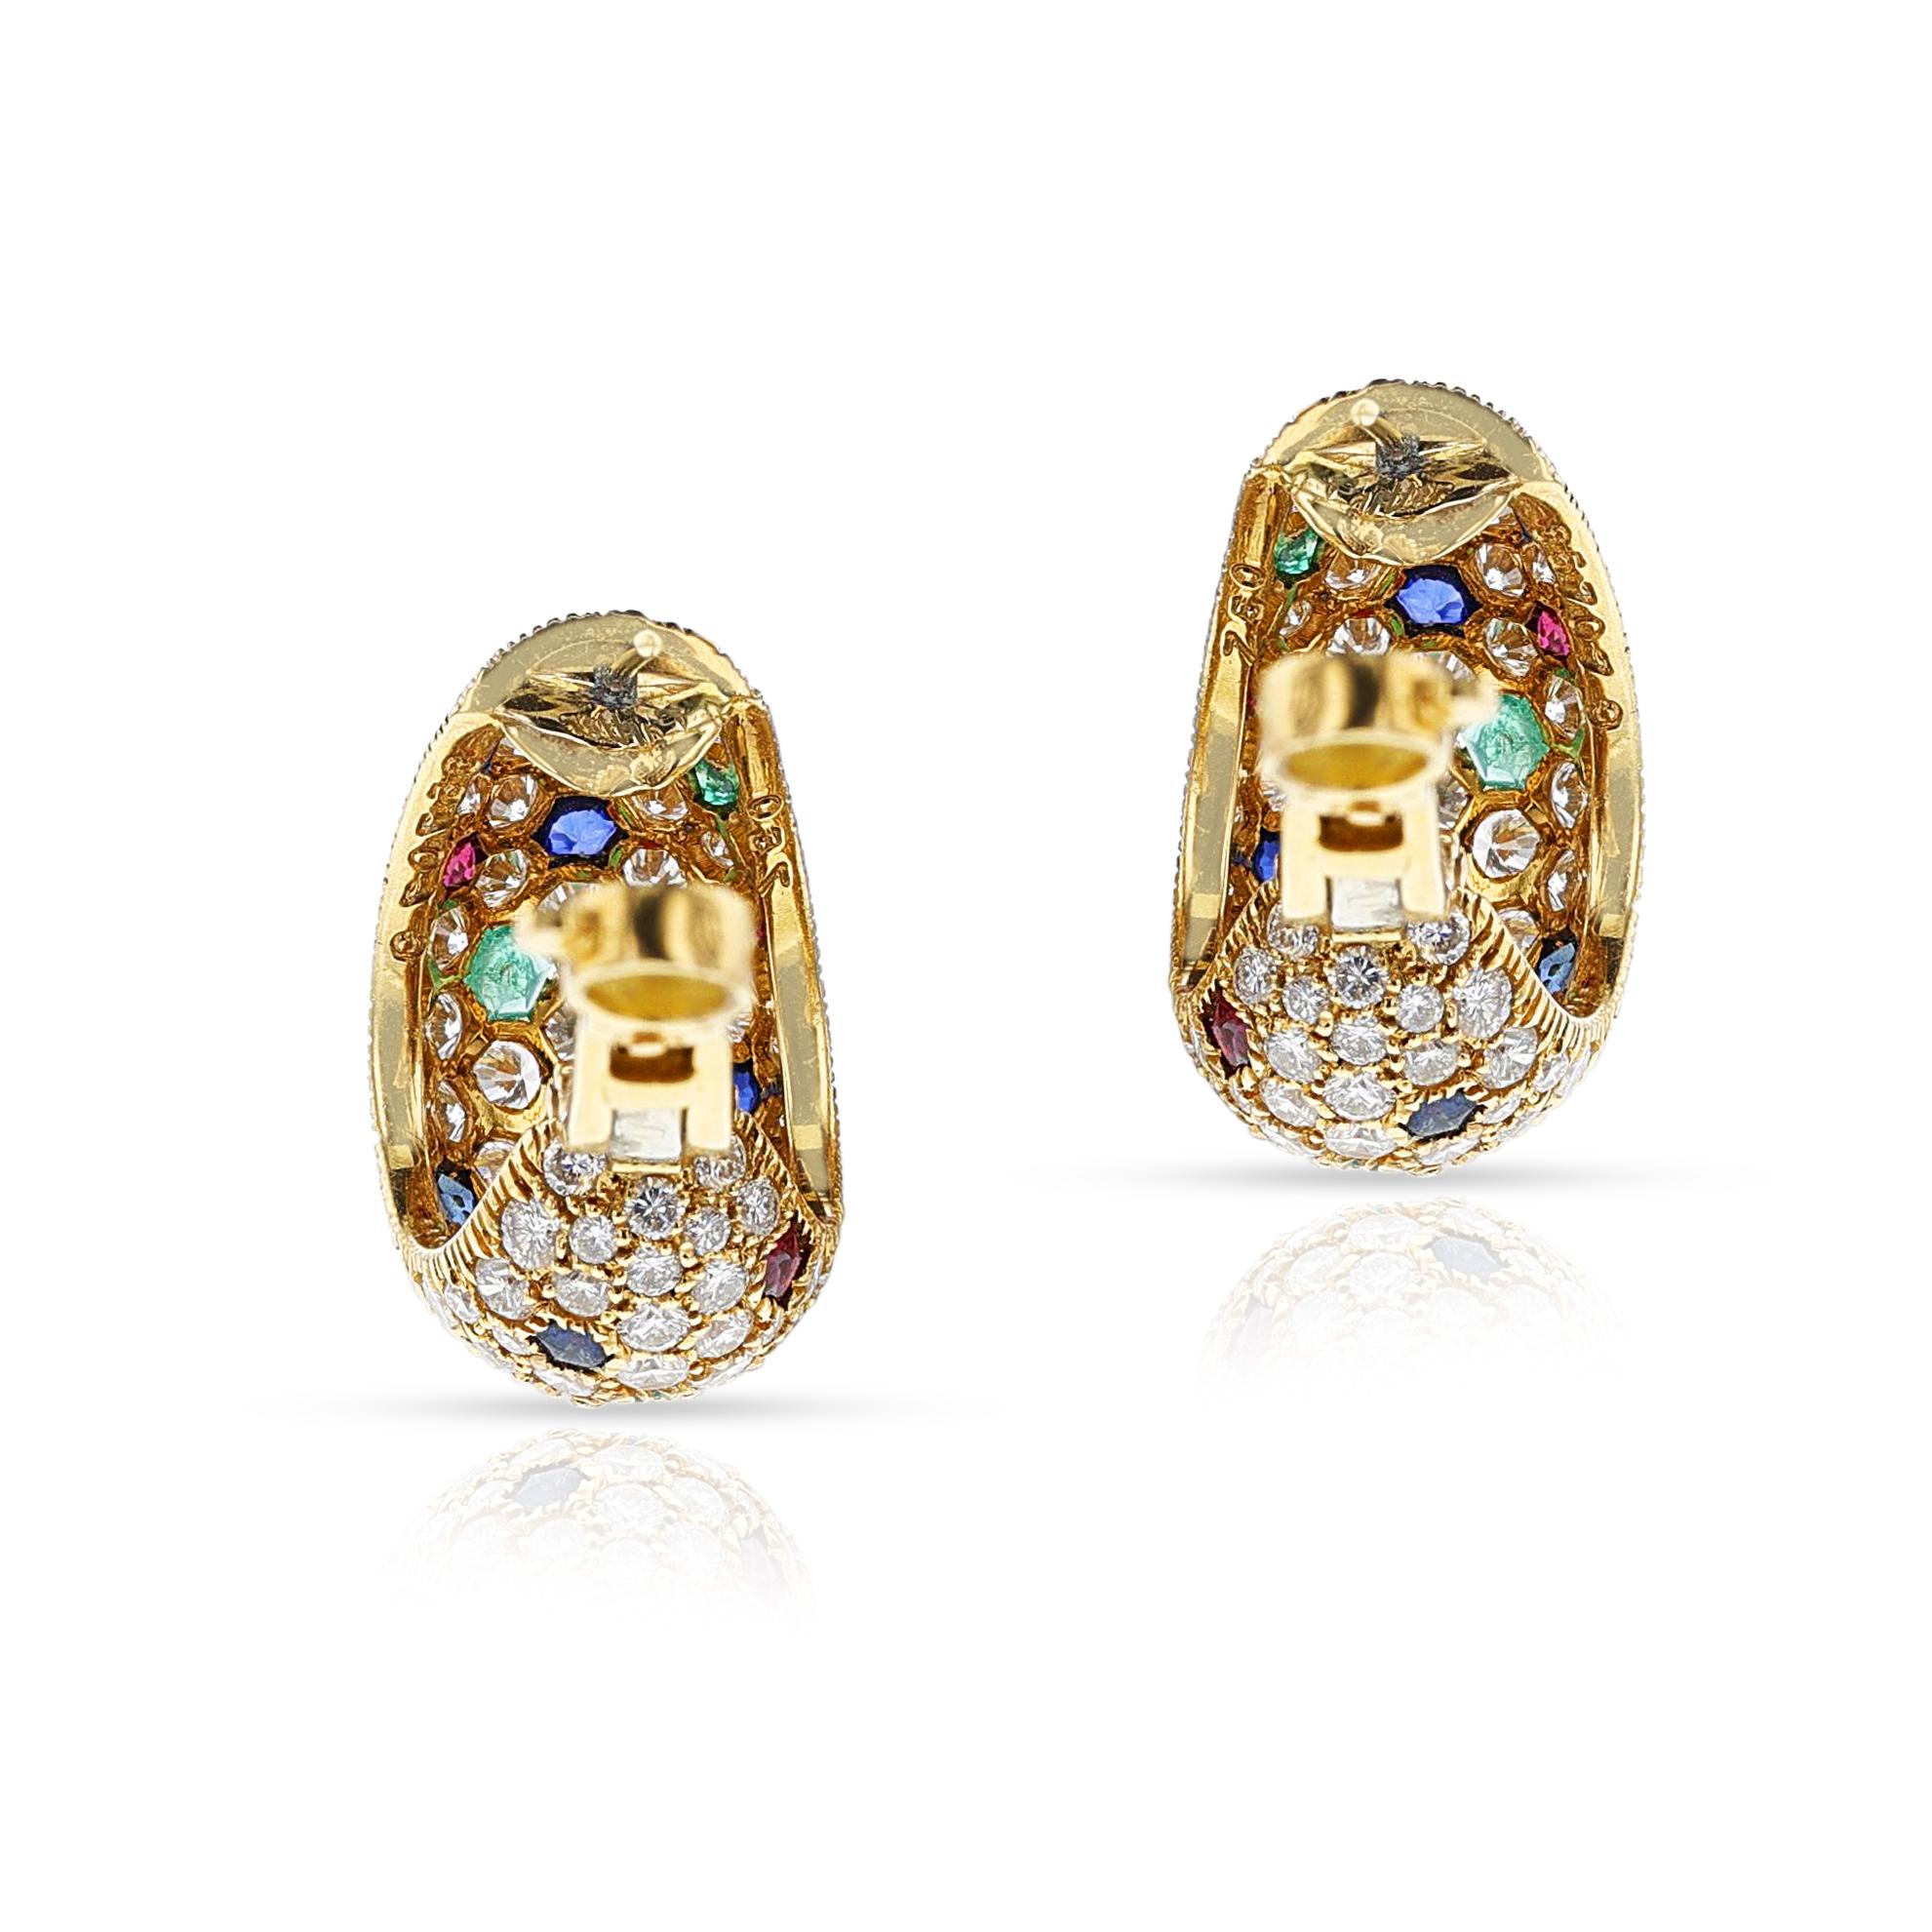 Cartier France Ruby, Emerald, Sapphire & Diamond Gem-Set Half-Hoop Earrings, 18k For Sale 1